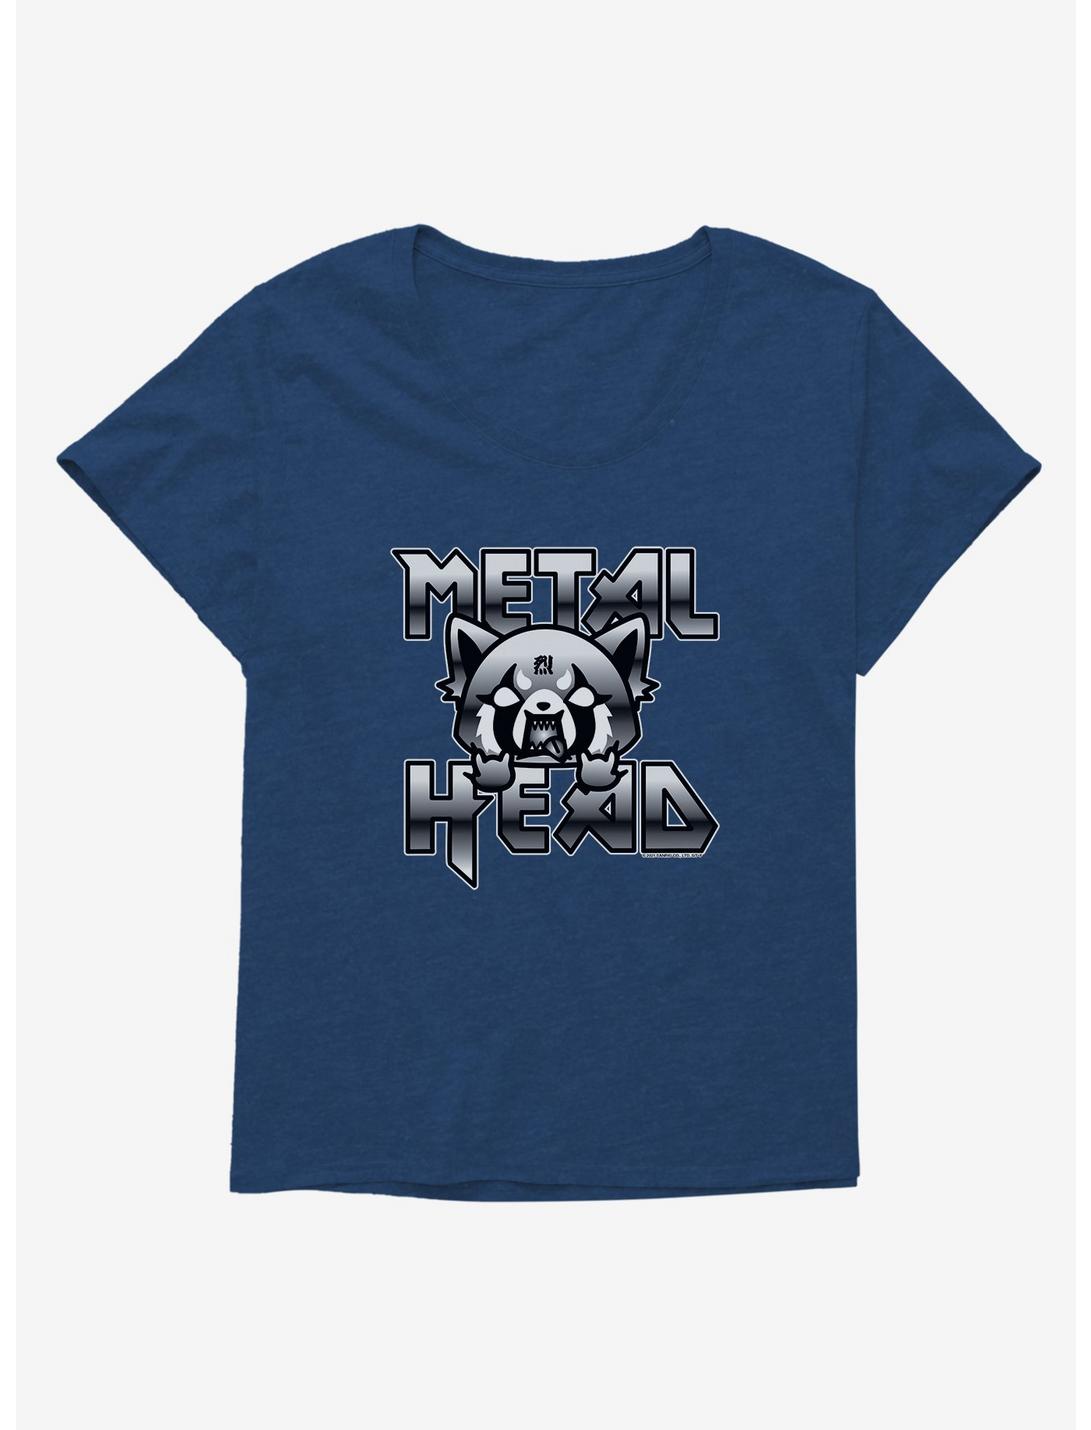 Aggretsuko Metal Head Girls Plus Size T-Shirt, , hi-res